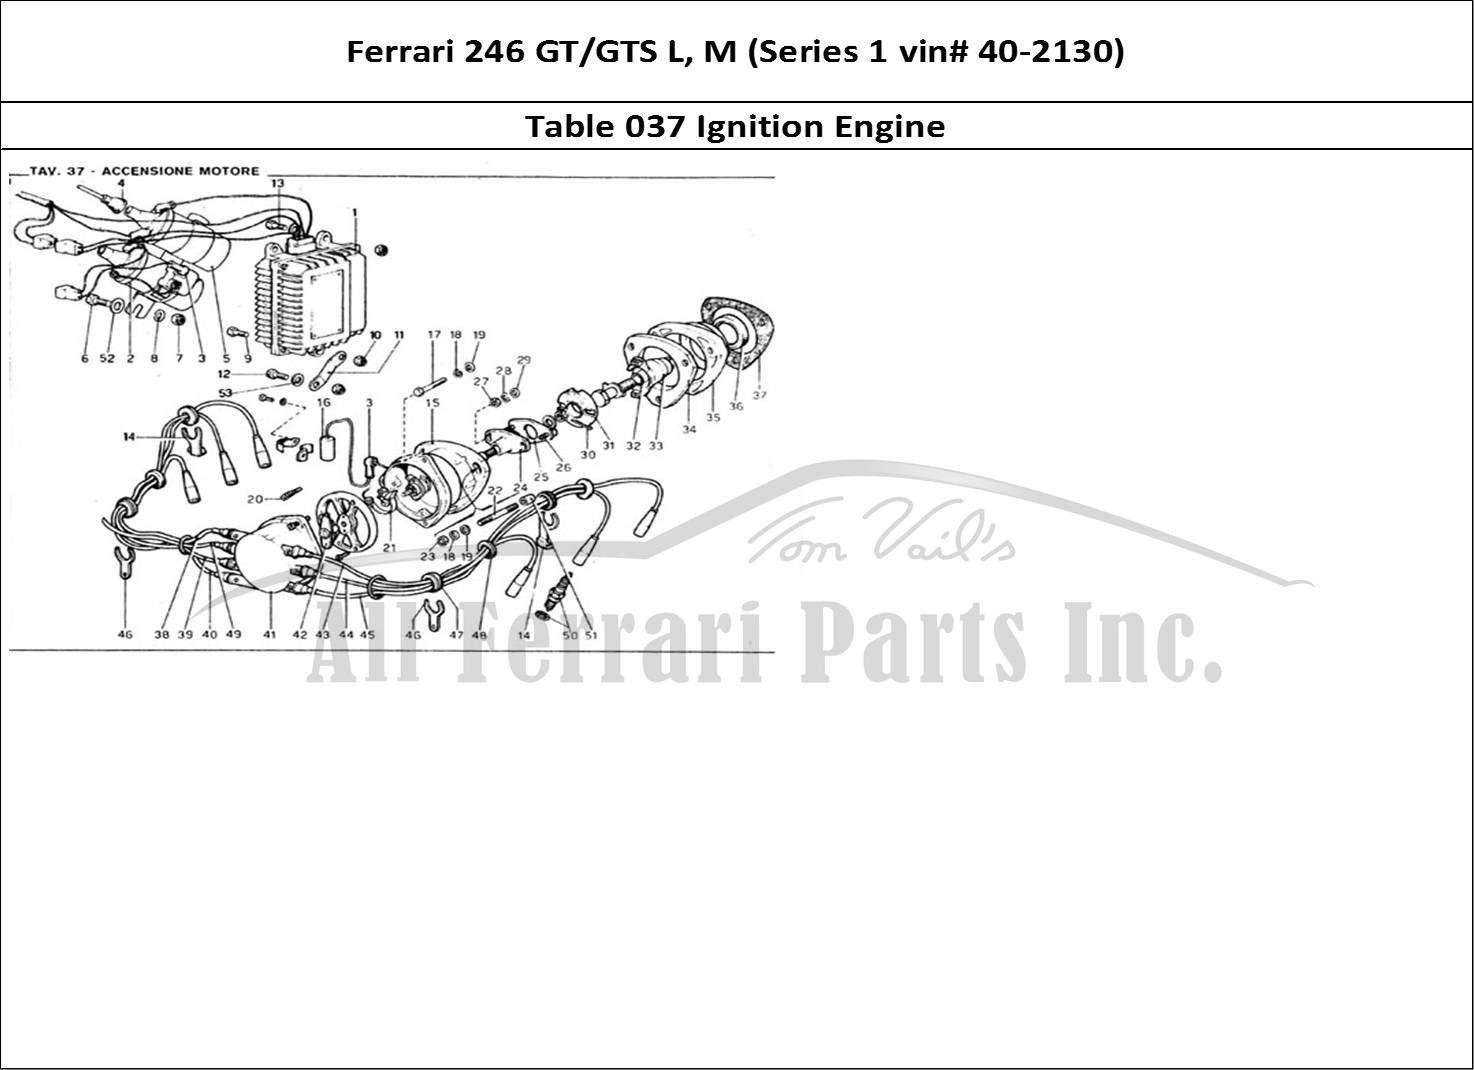 Ferrari Parts Ferrari 246 GT Series 1 Page 037 Engine Ignition